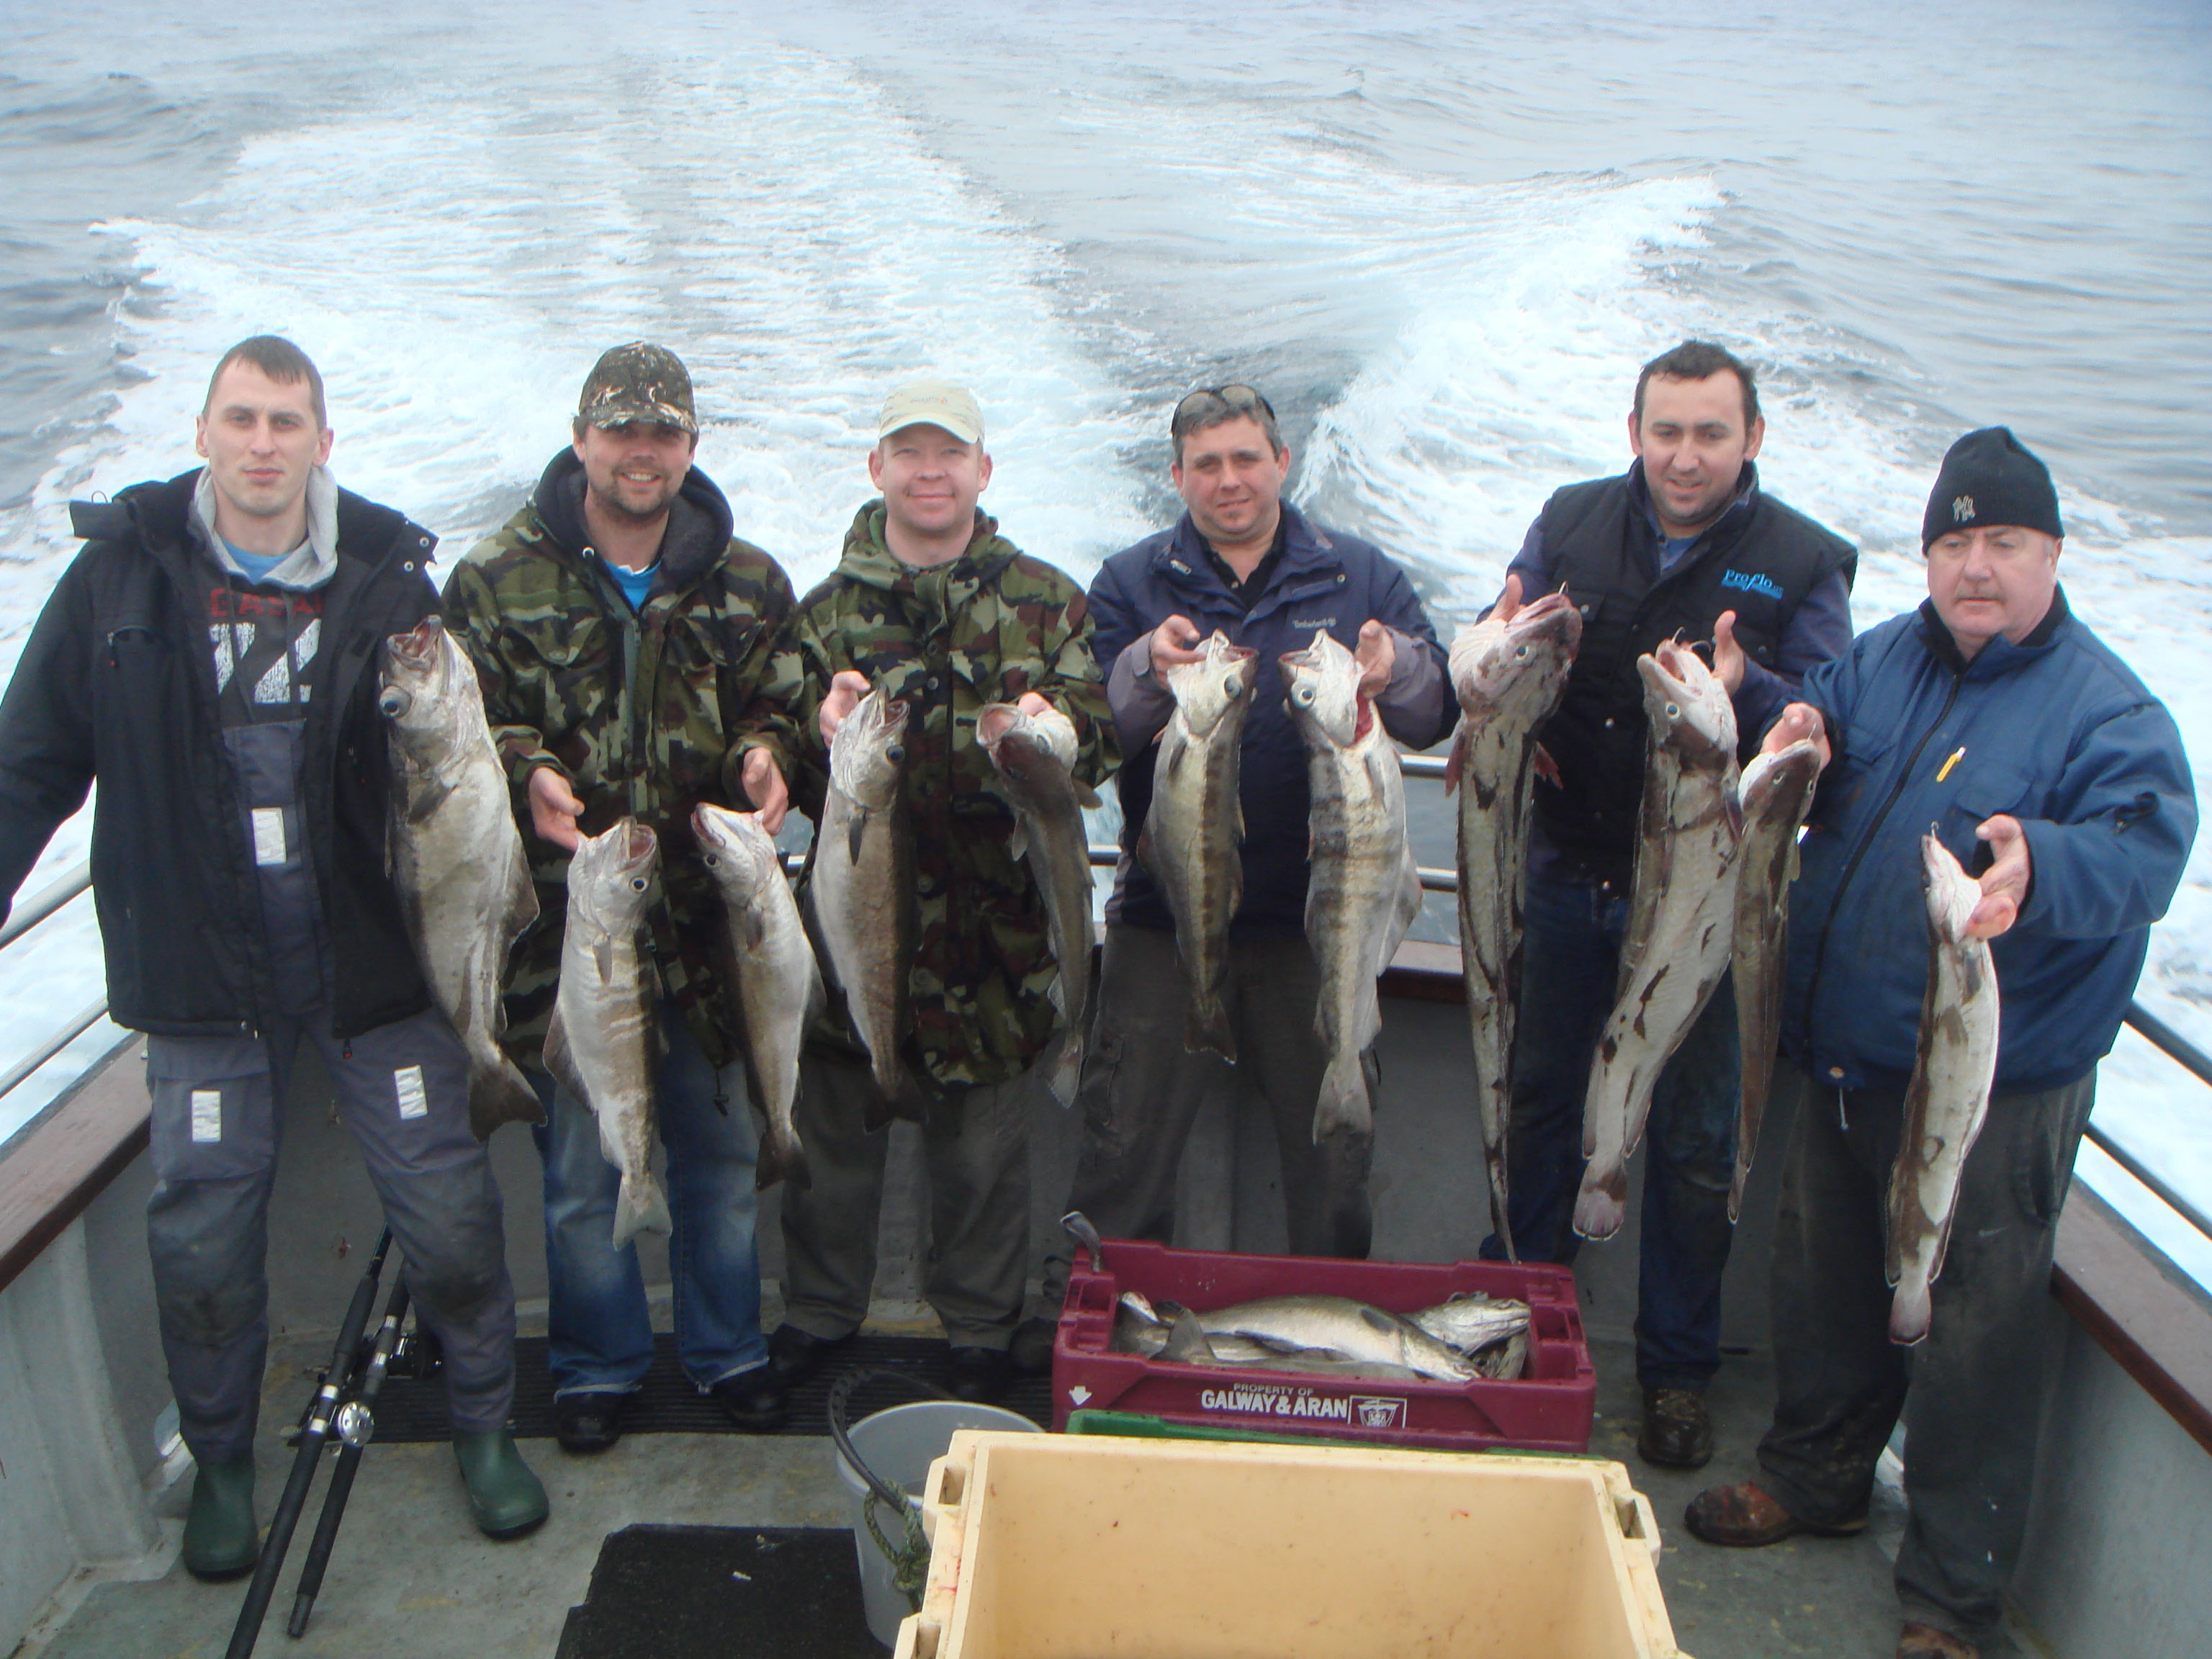 Happy anglers with plenty of fish